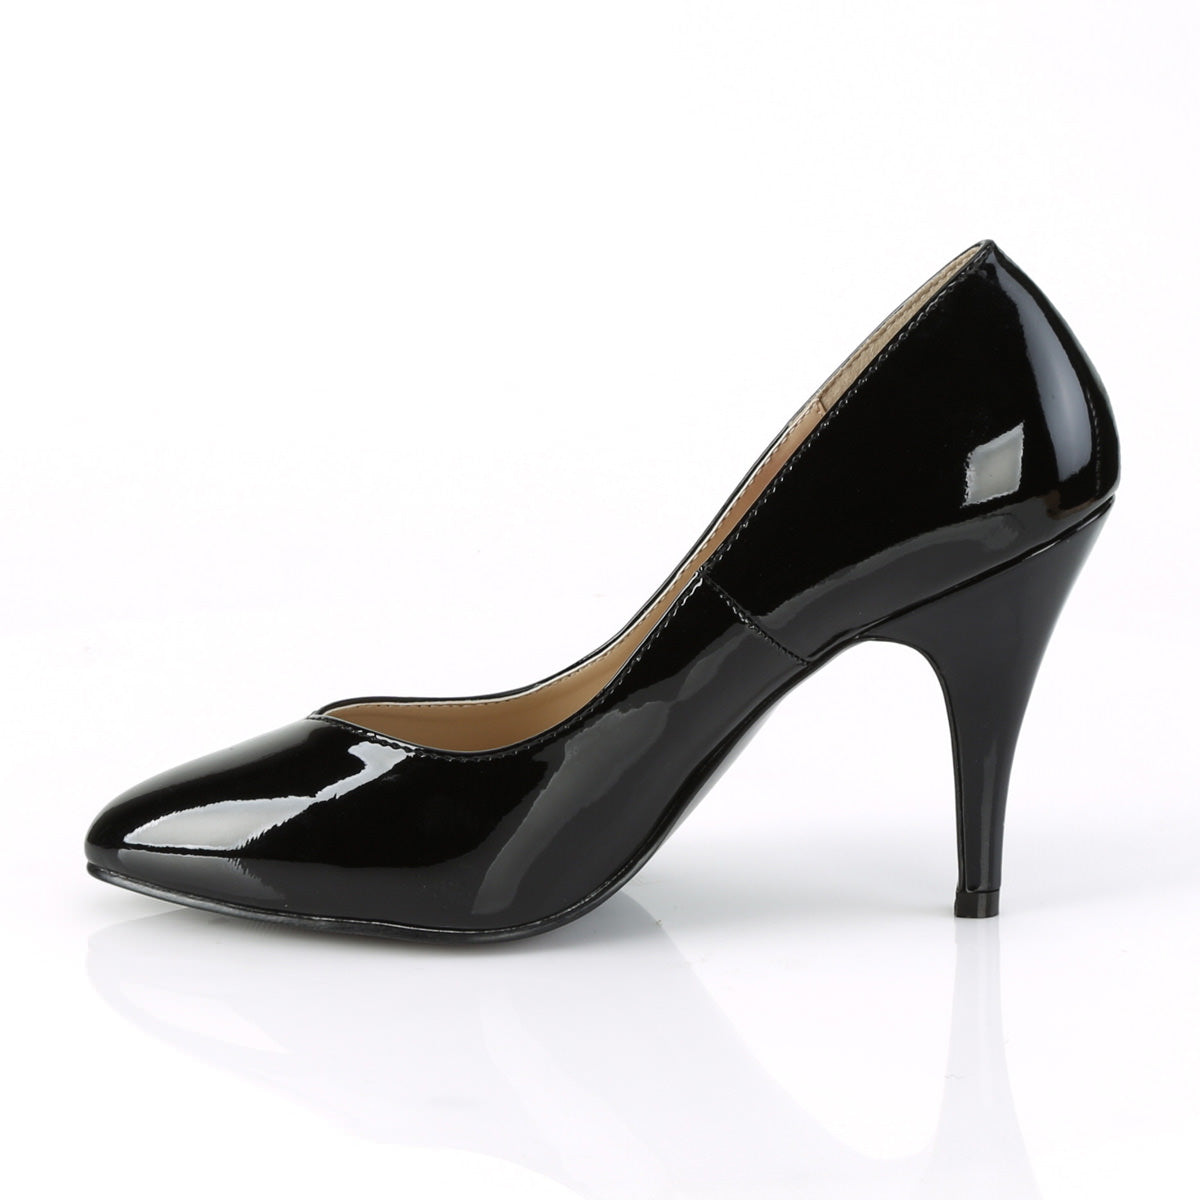 4 Inch Heel Black Pu Wide Width Drag Queen Shoes | DREAM-420W – Shoecup.com